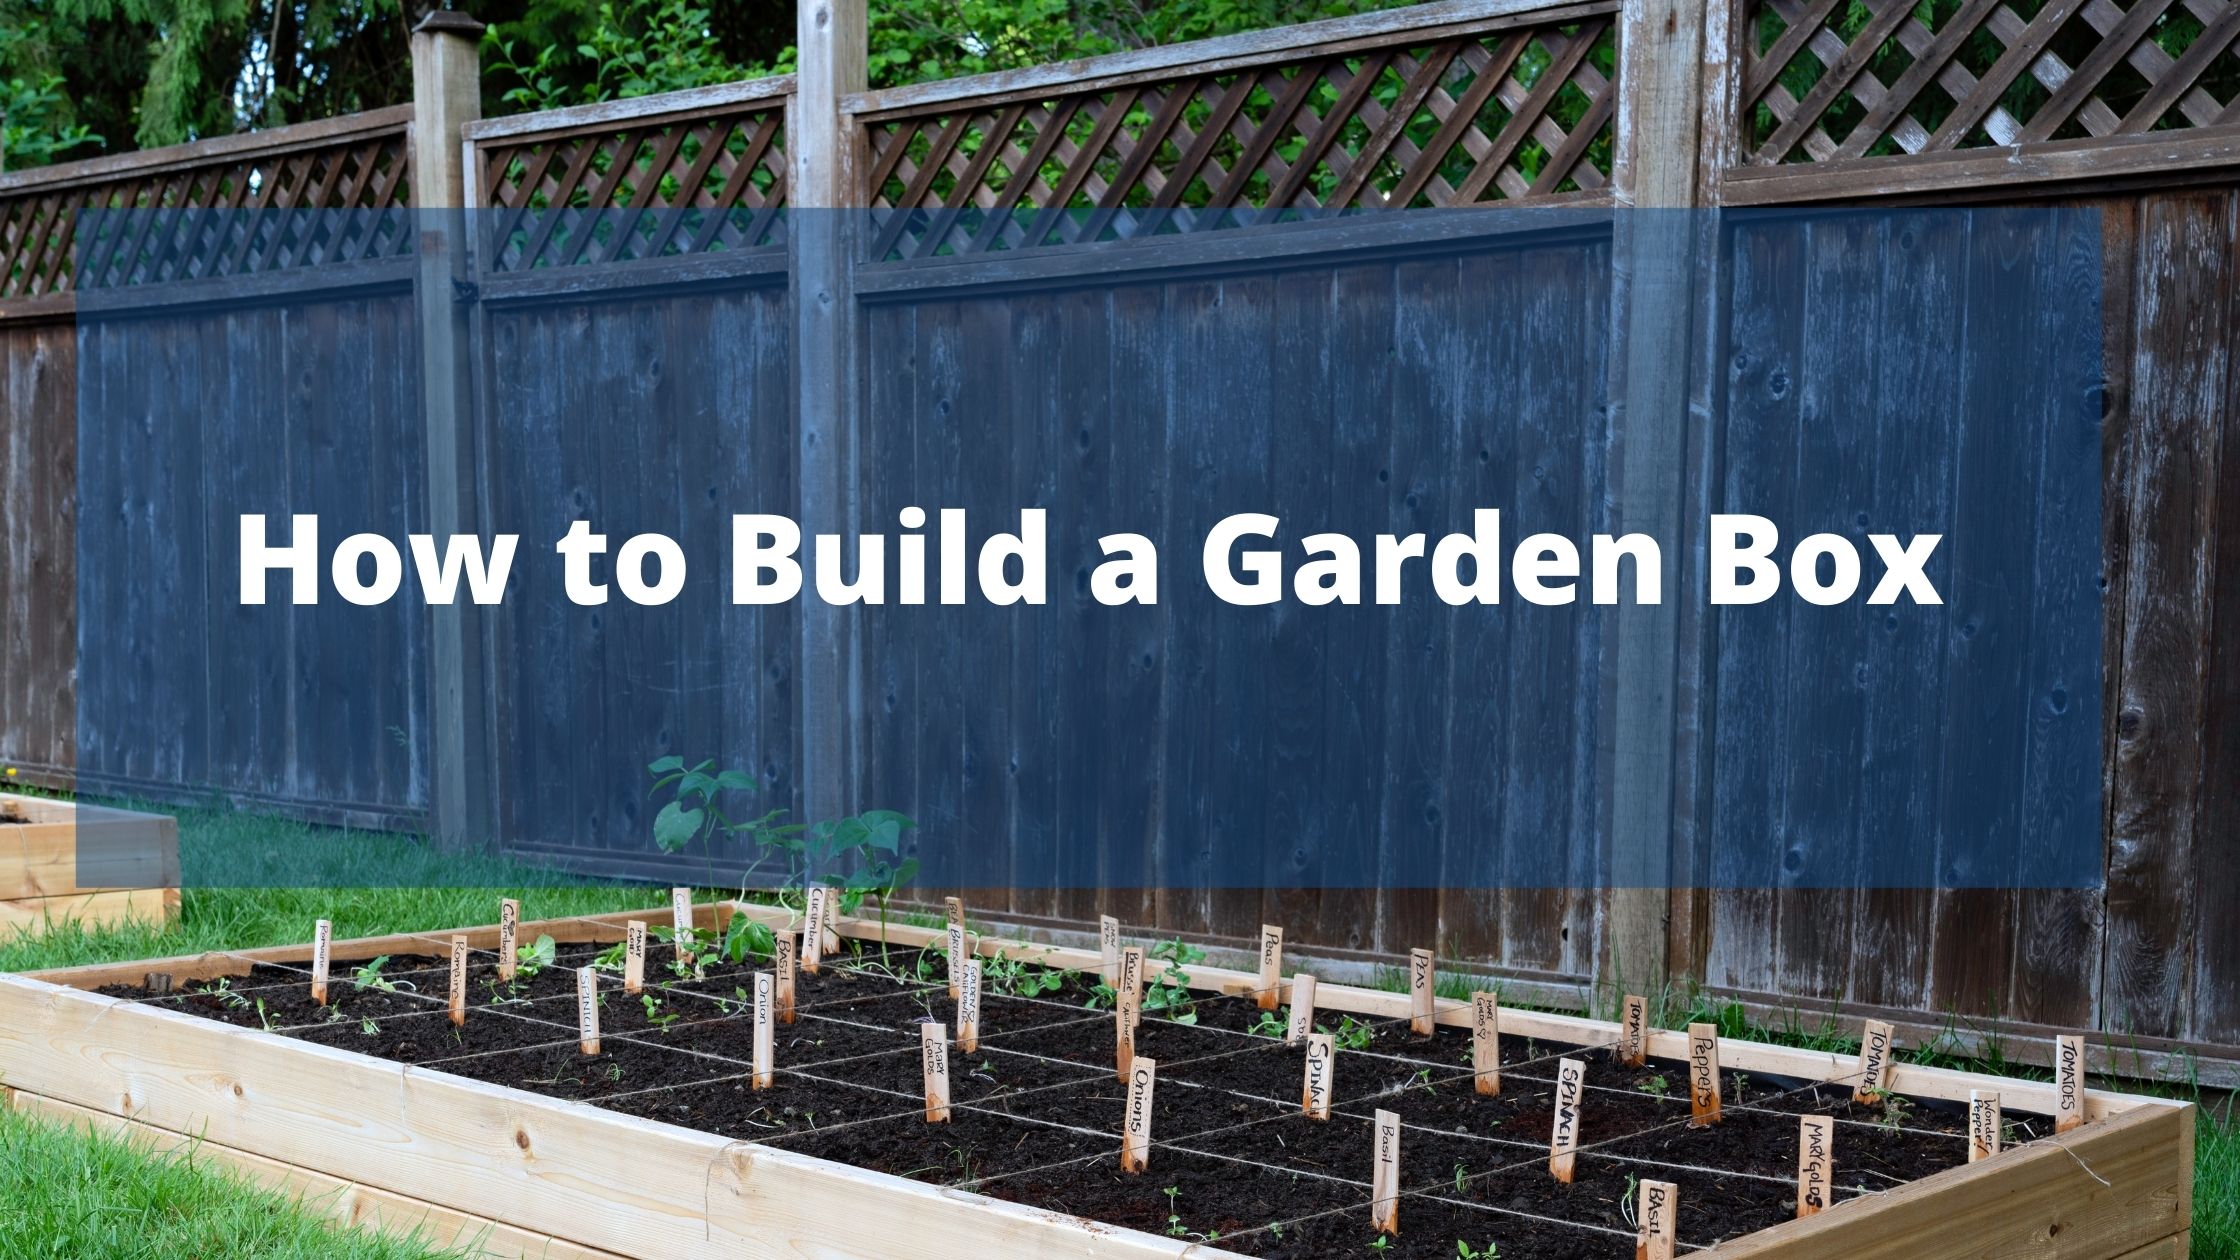 https://handymanconnection.com/wp-content/uploads/2021/06/How-to-Build-a-Garden-Box.jpg